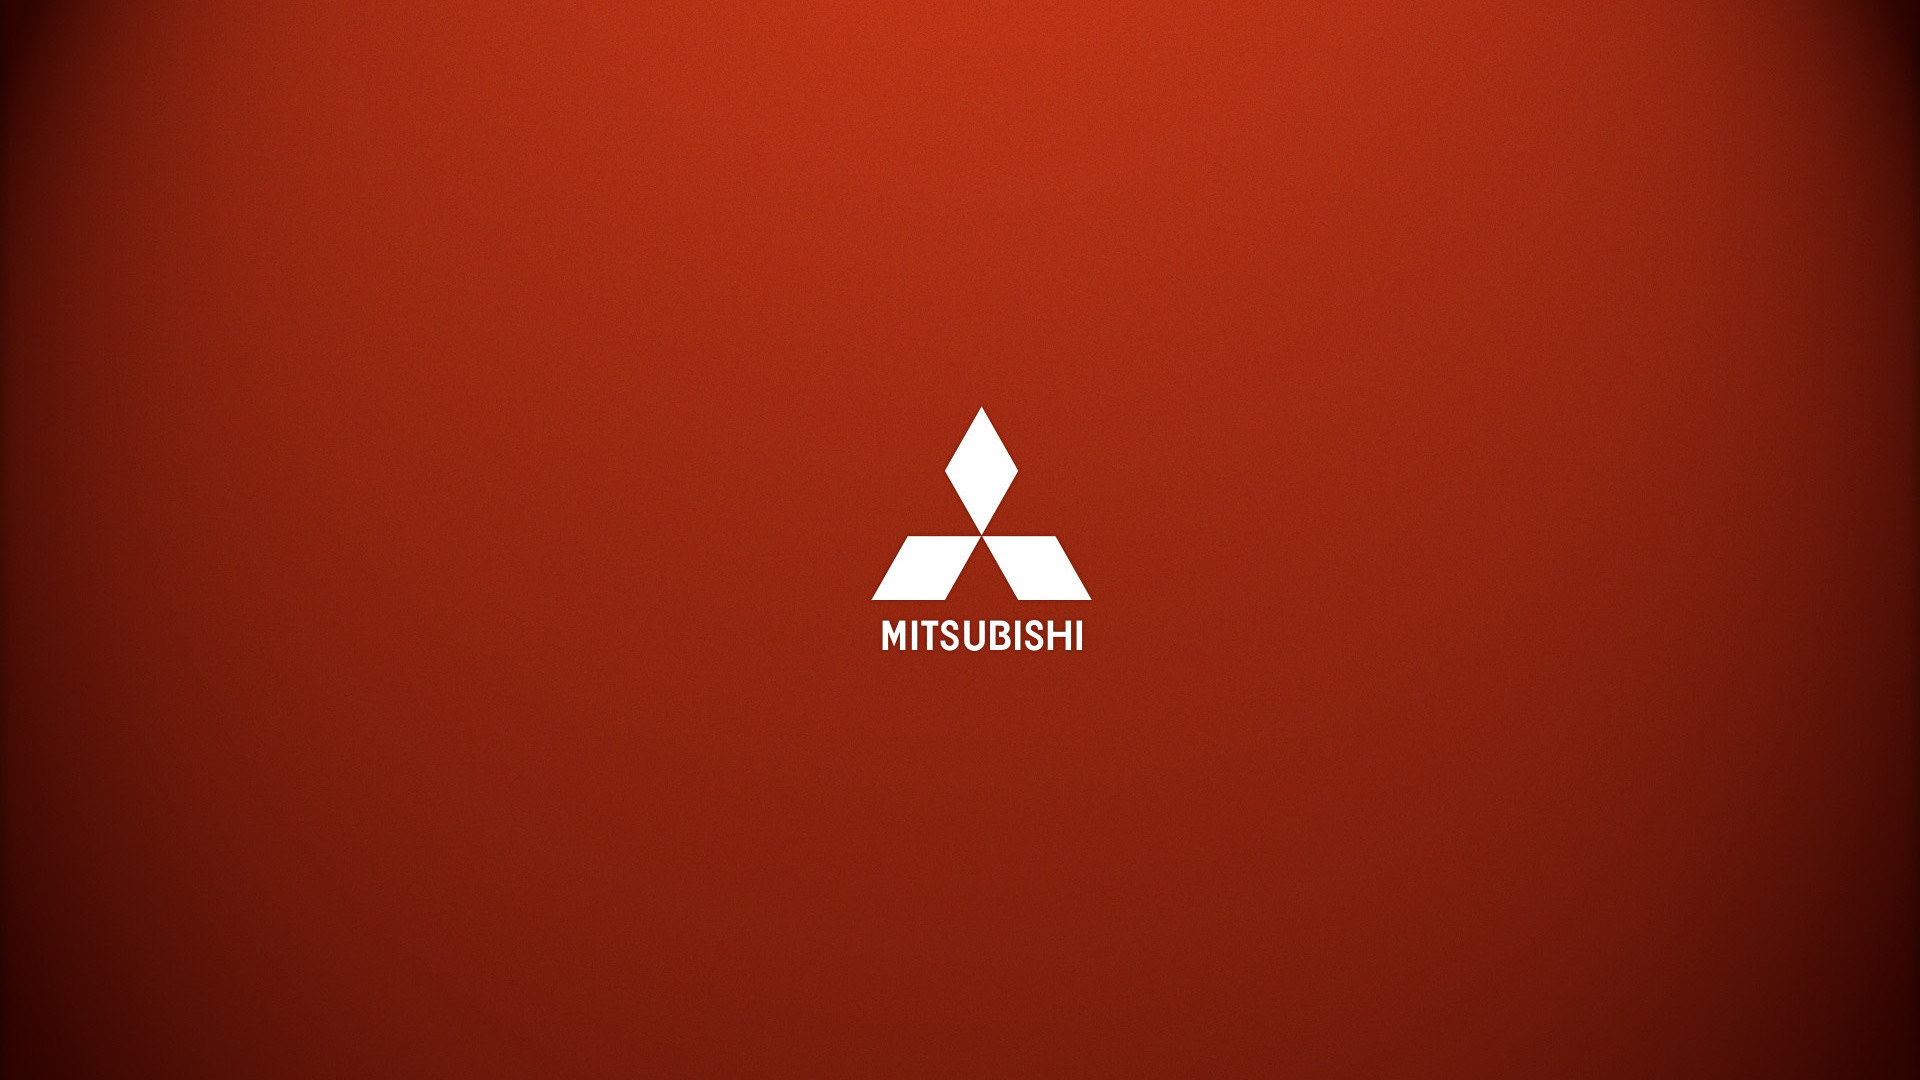 mitsubishi wallpaper hd,logo,orange,font,text,brand